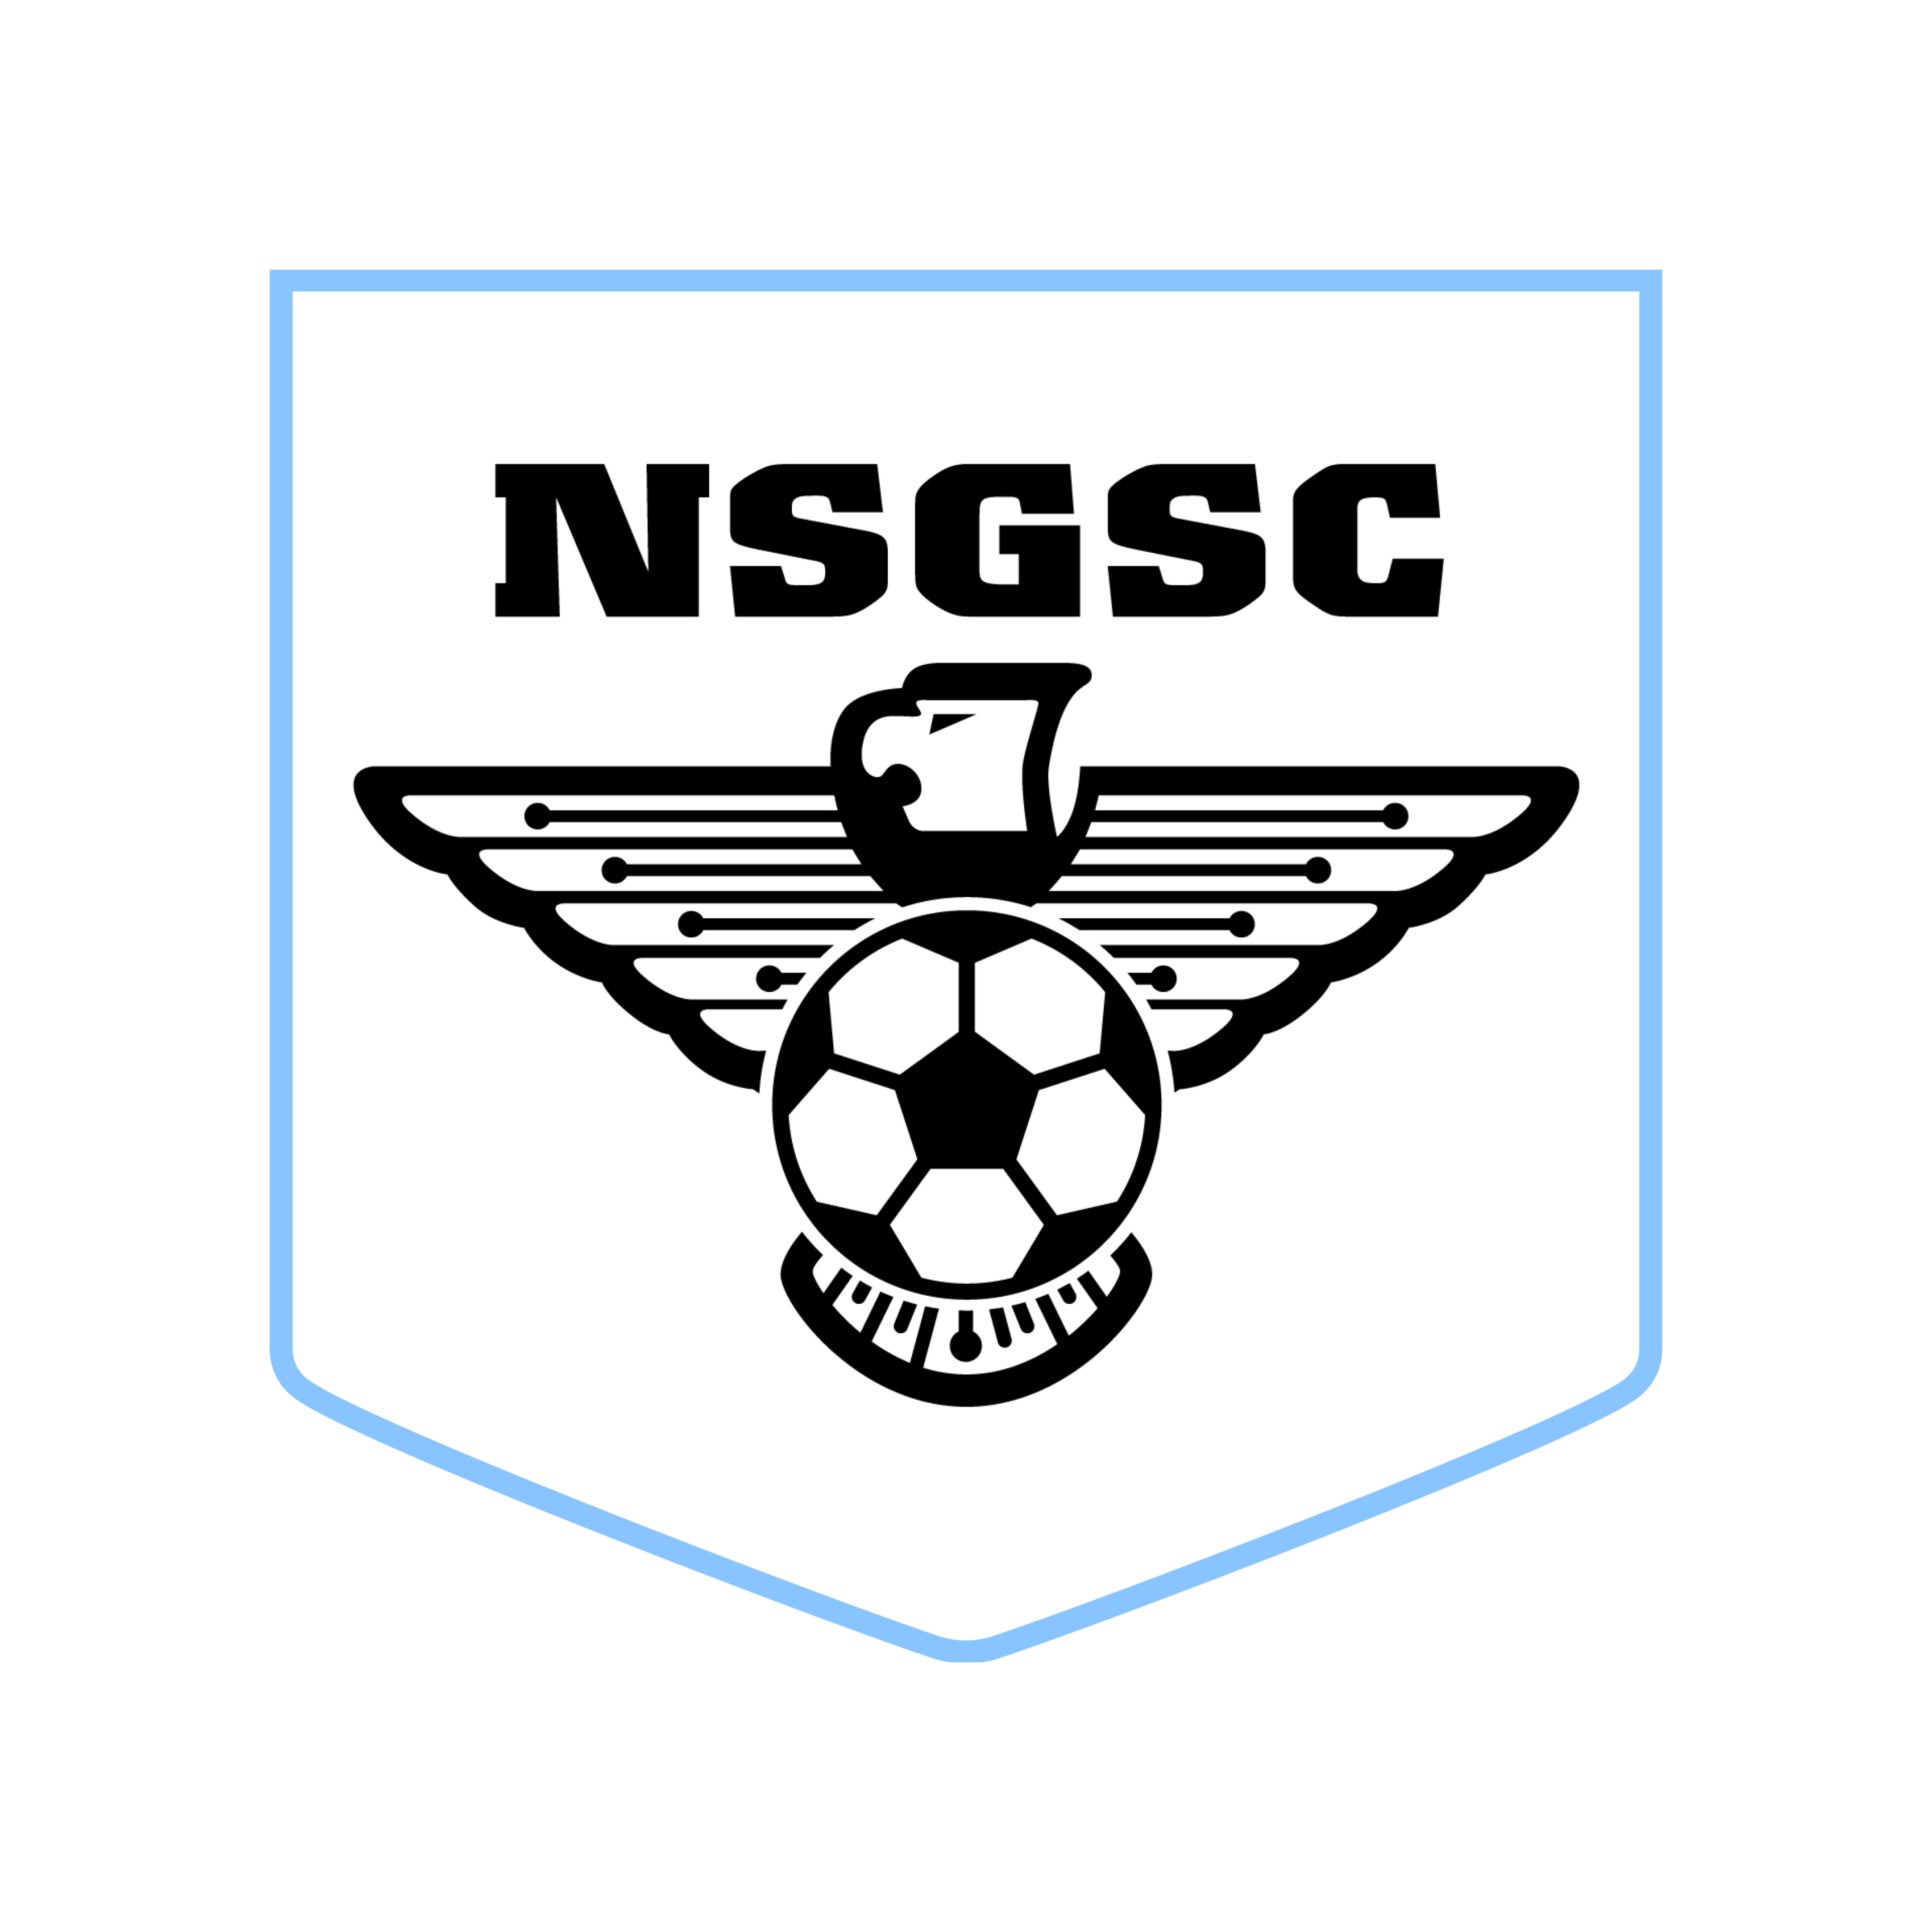 North Shore Girls Soccer Club